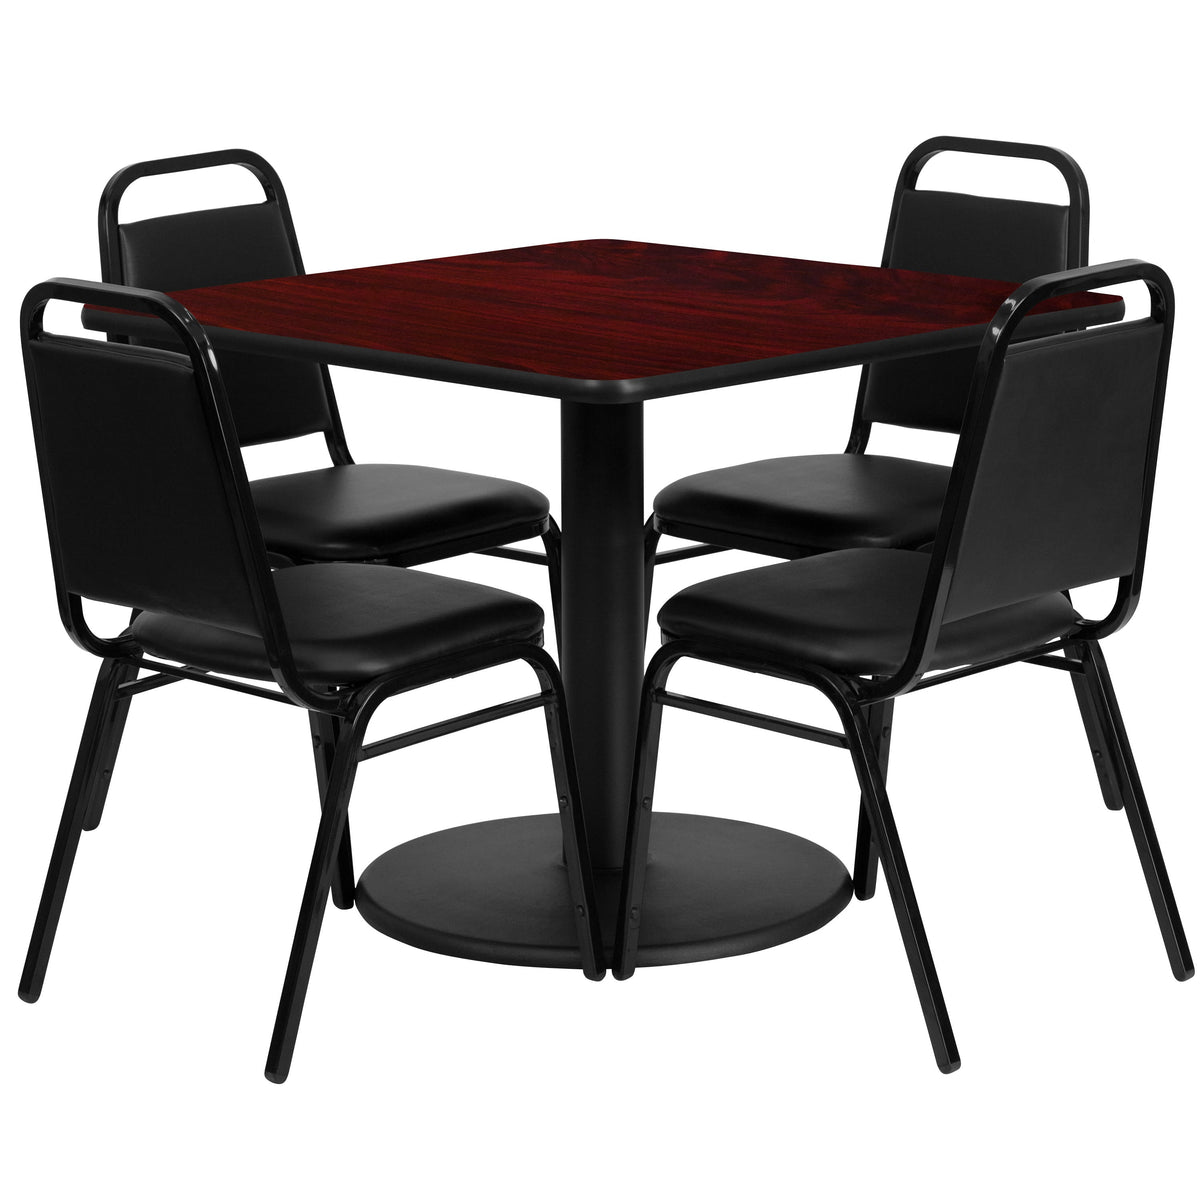 Mahogany Top/Black Vinyl Seat |#| 36inch Square Mahogany Laminate Table with Round Base and 4 Black Banquet Chairs